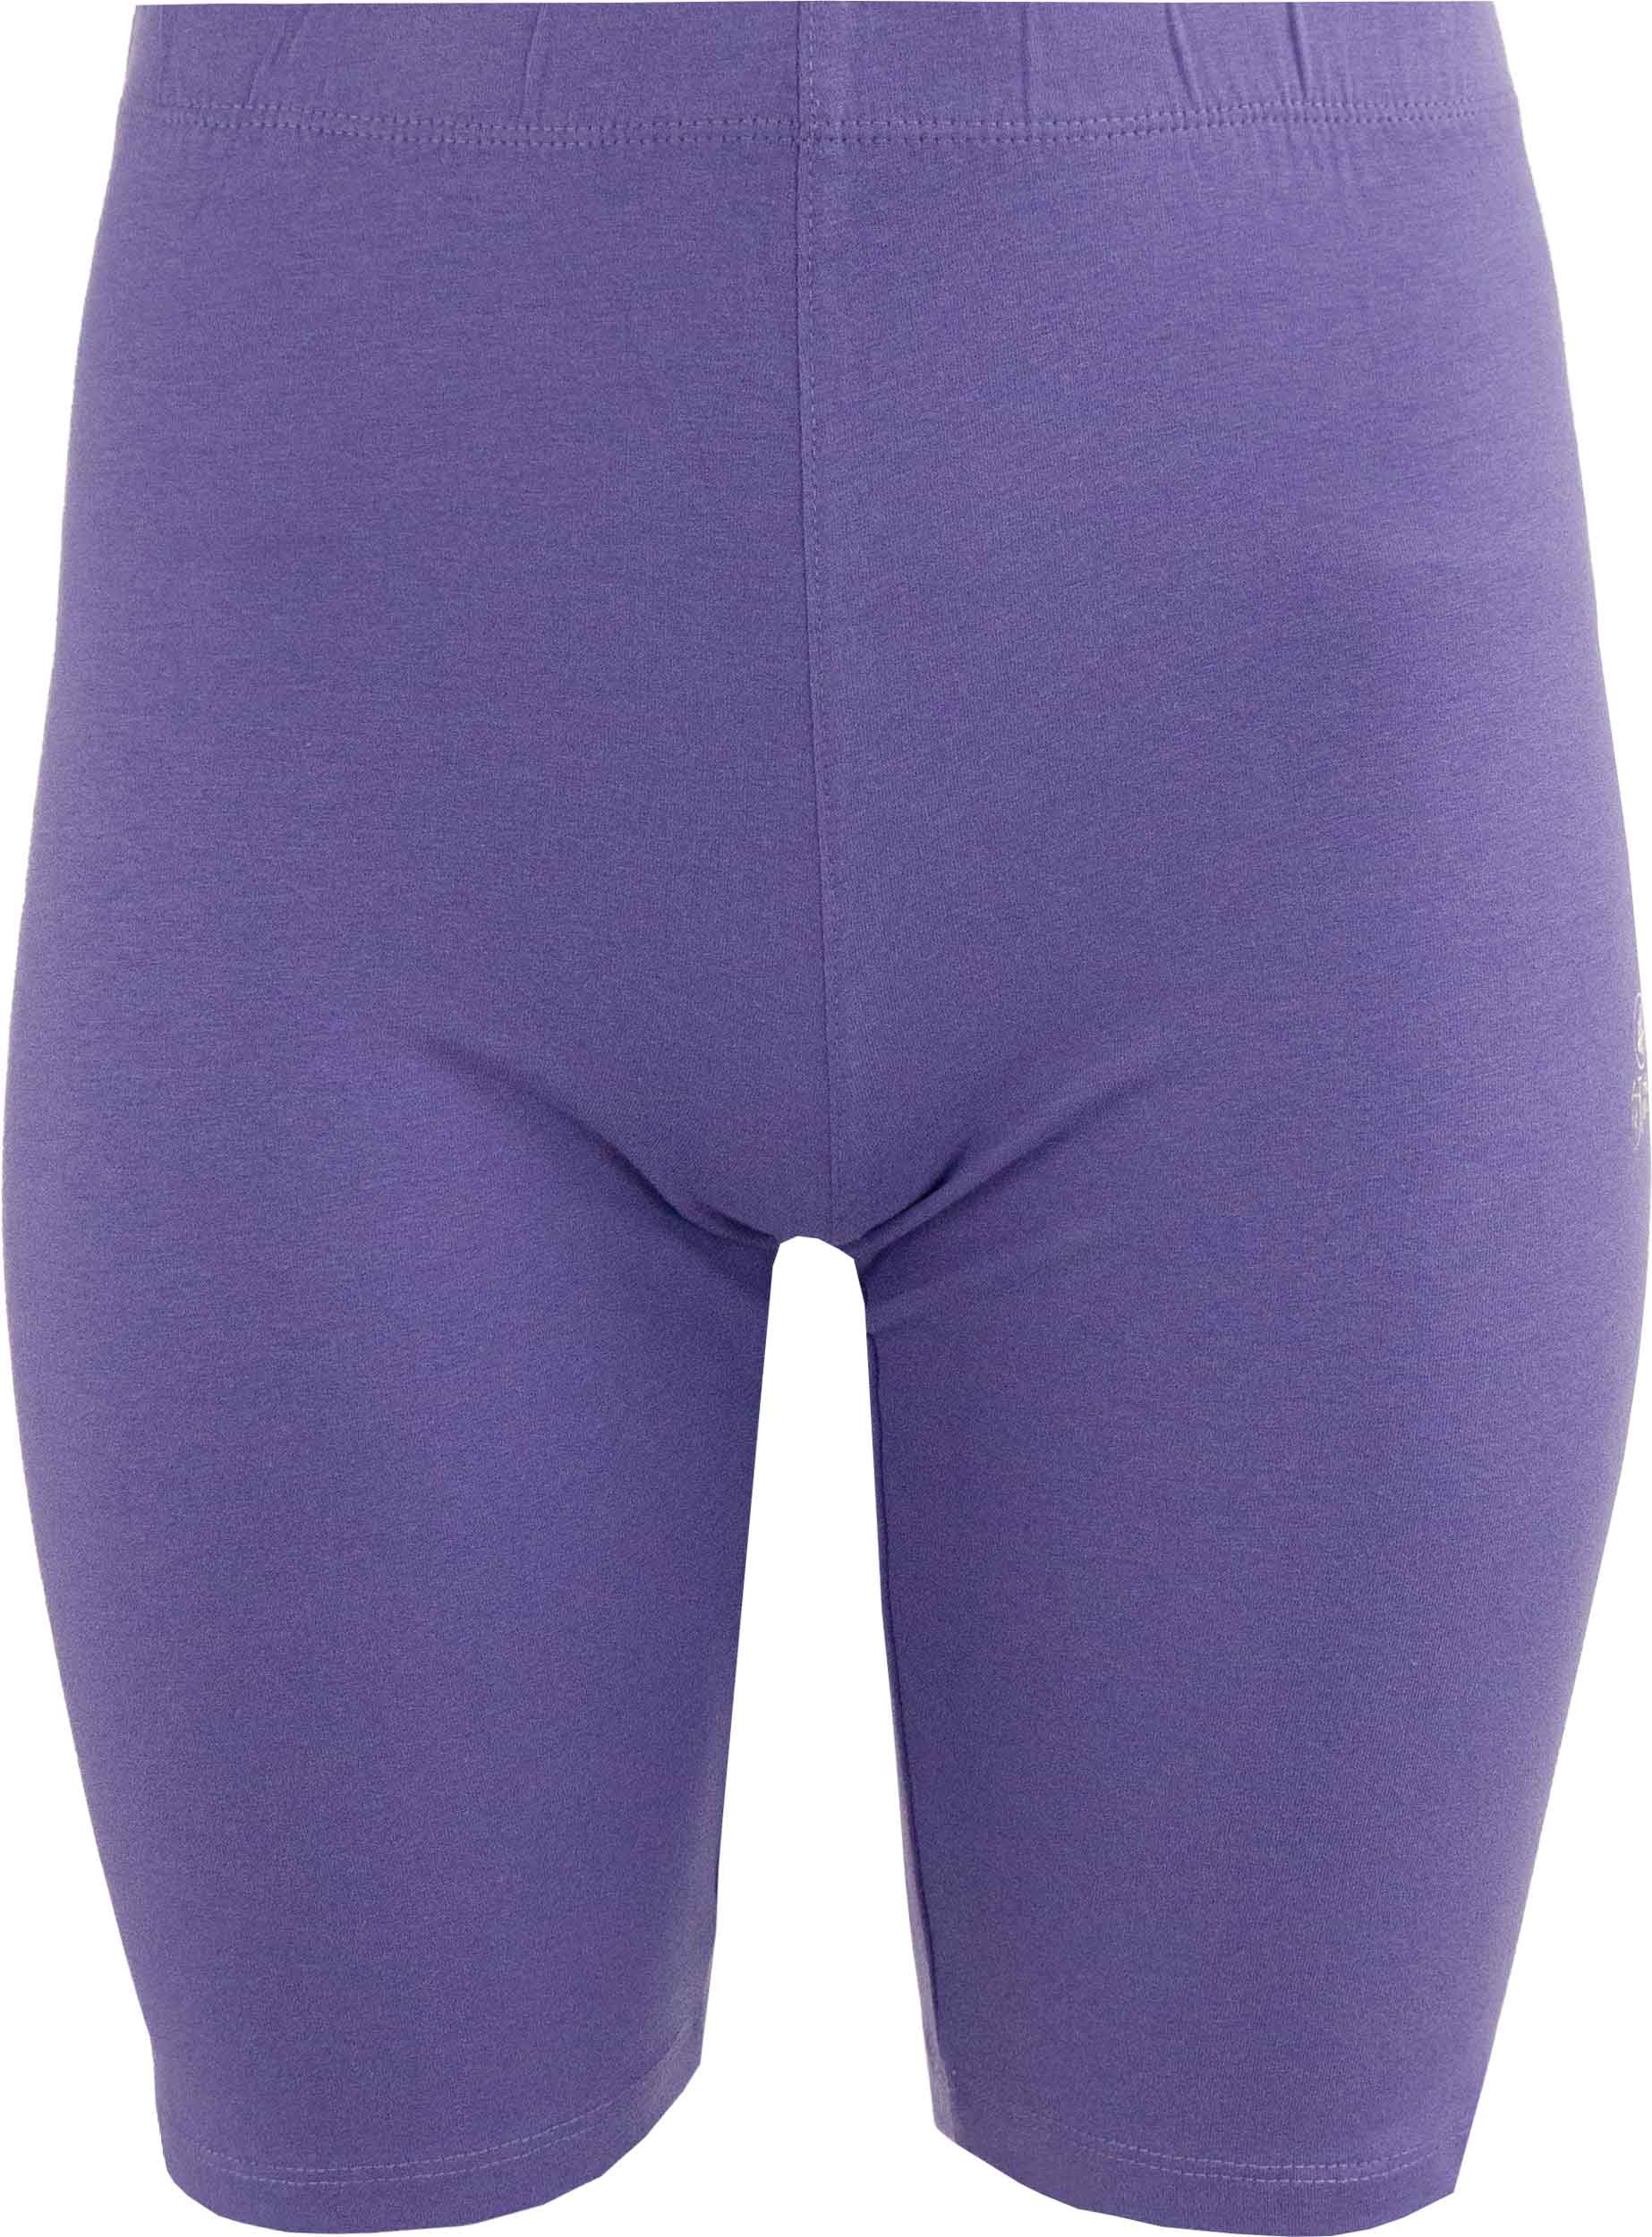 Dámské elastické šortky Athl. DPT Dorina violet|M